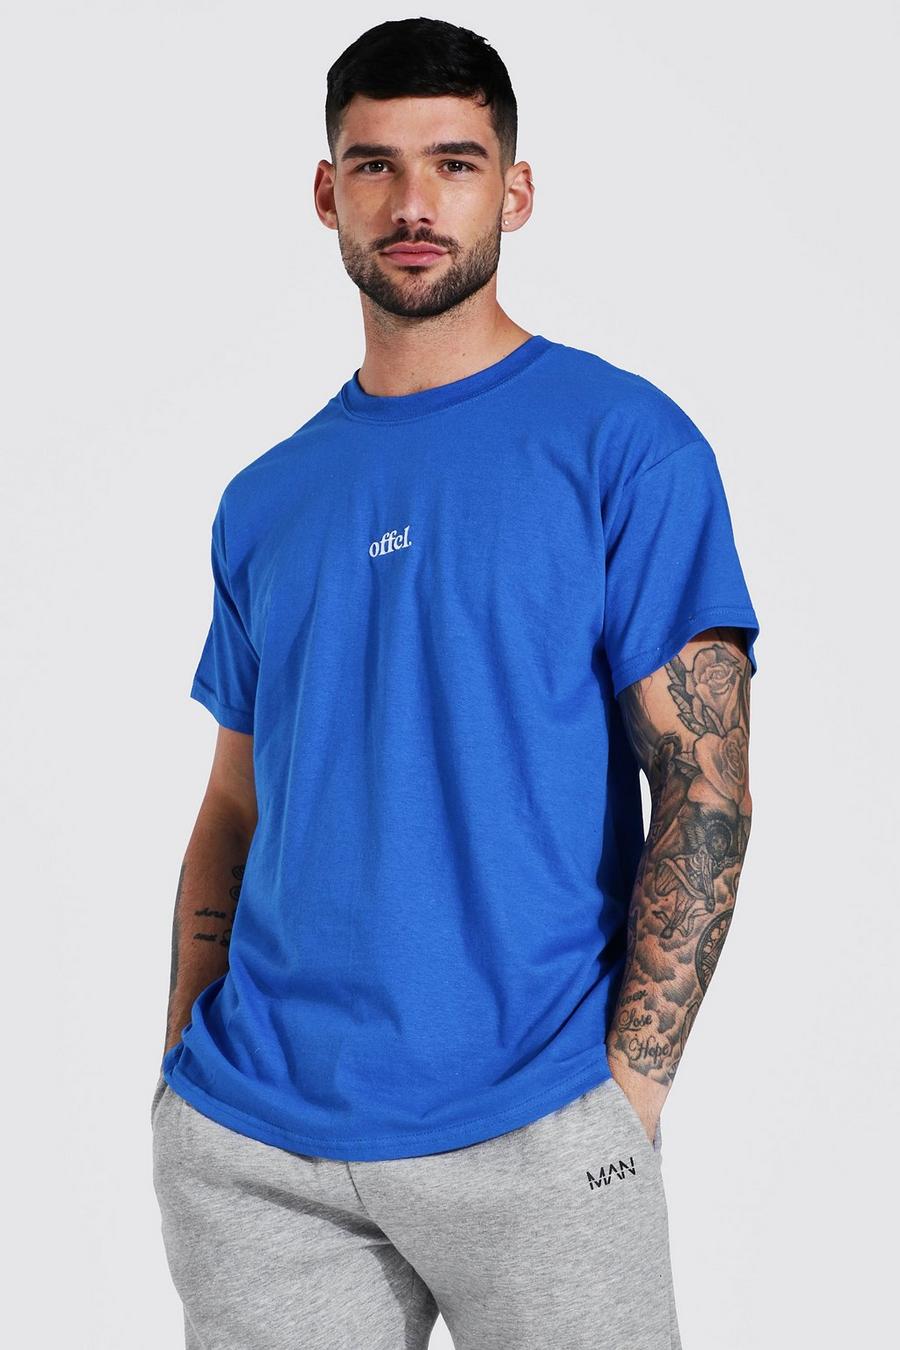 Camiseta bordada Offcl, Cobalt azul image number 1